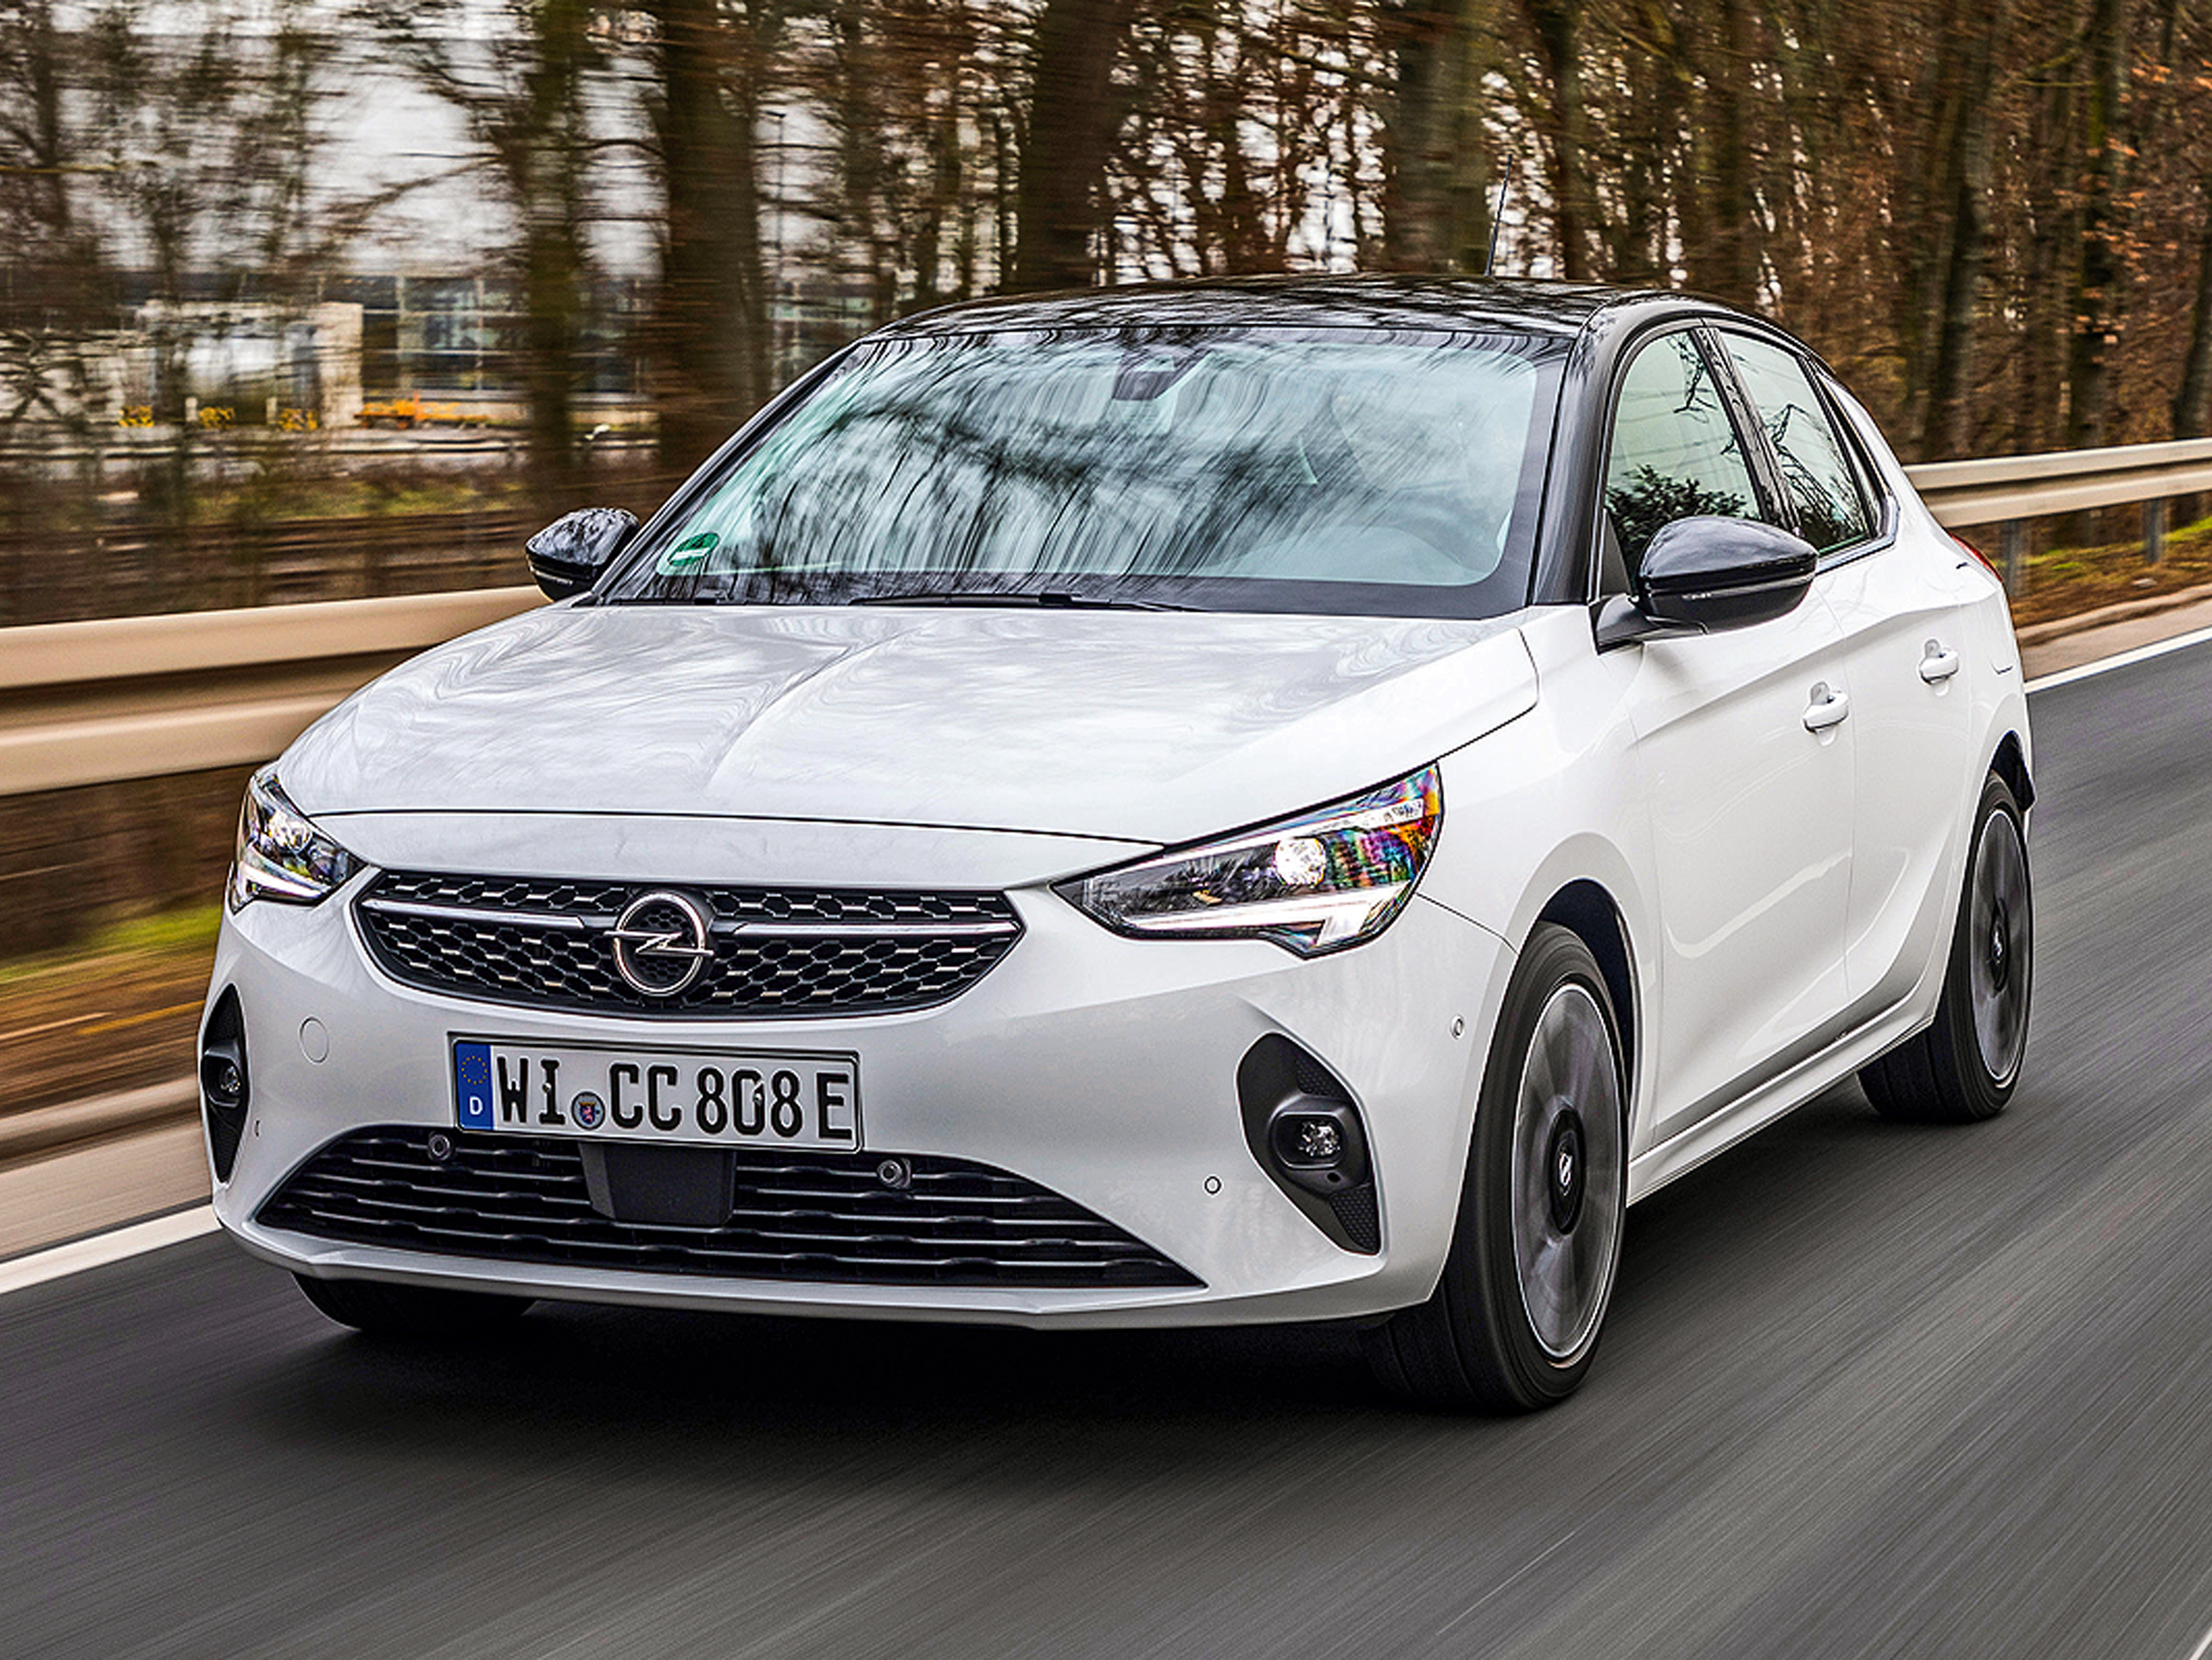 Schnäppchen-Alarm: Opel Corsa-e für nur 55 Euro netto leasen